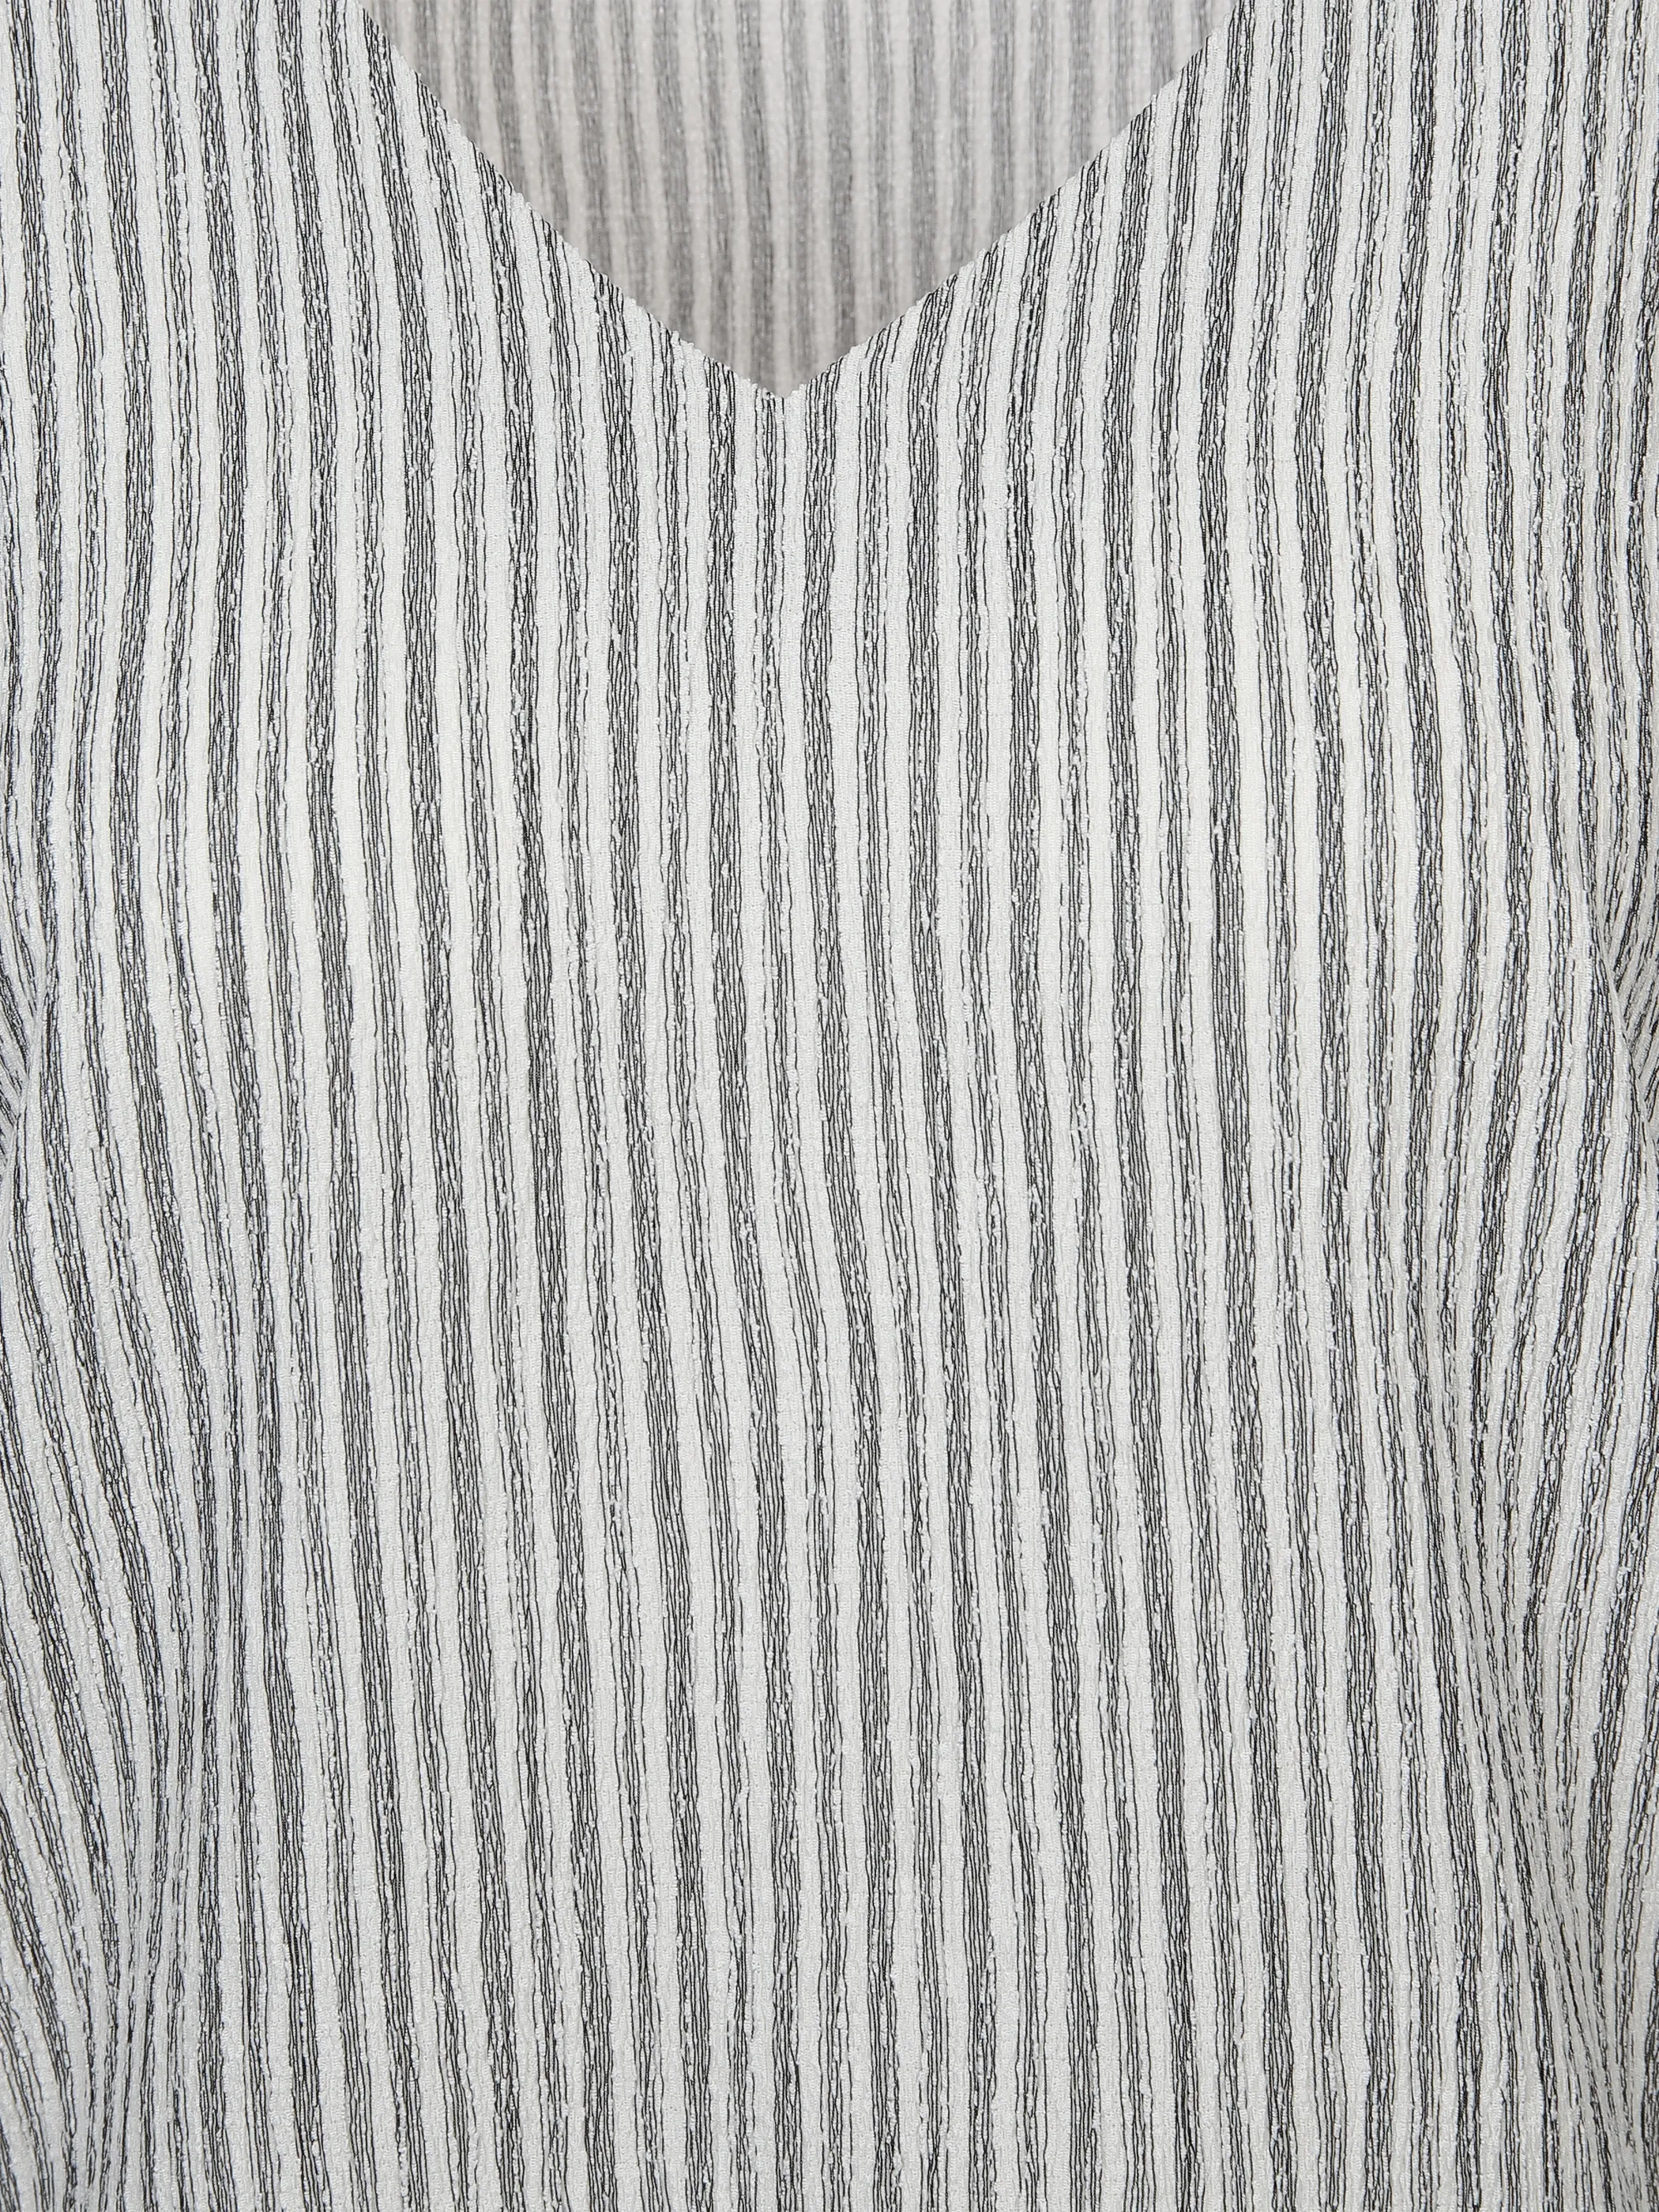 Lisa Tossa Da-Shirt in Crashoptik Weiß 891199 OFFWBLACK 3